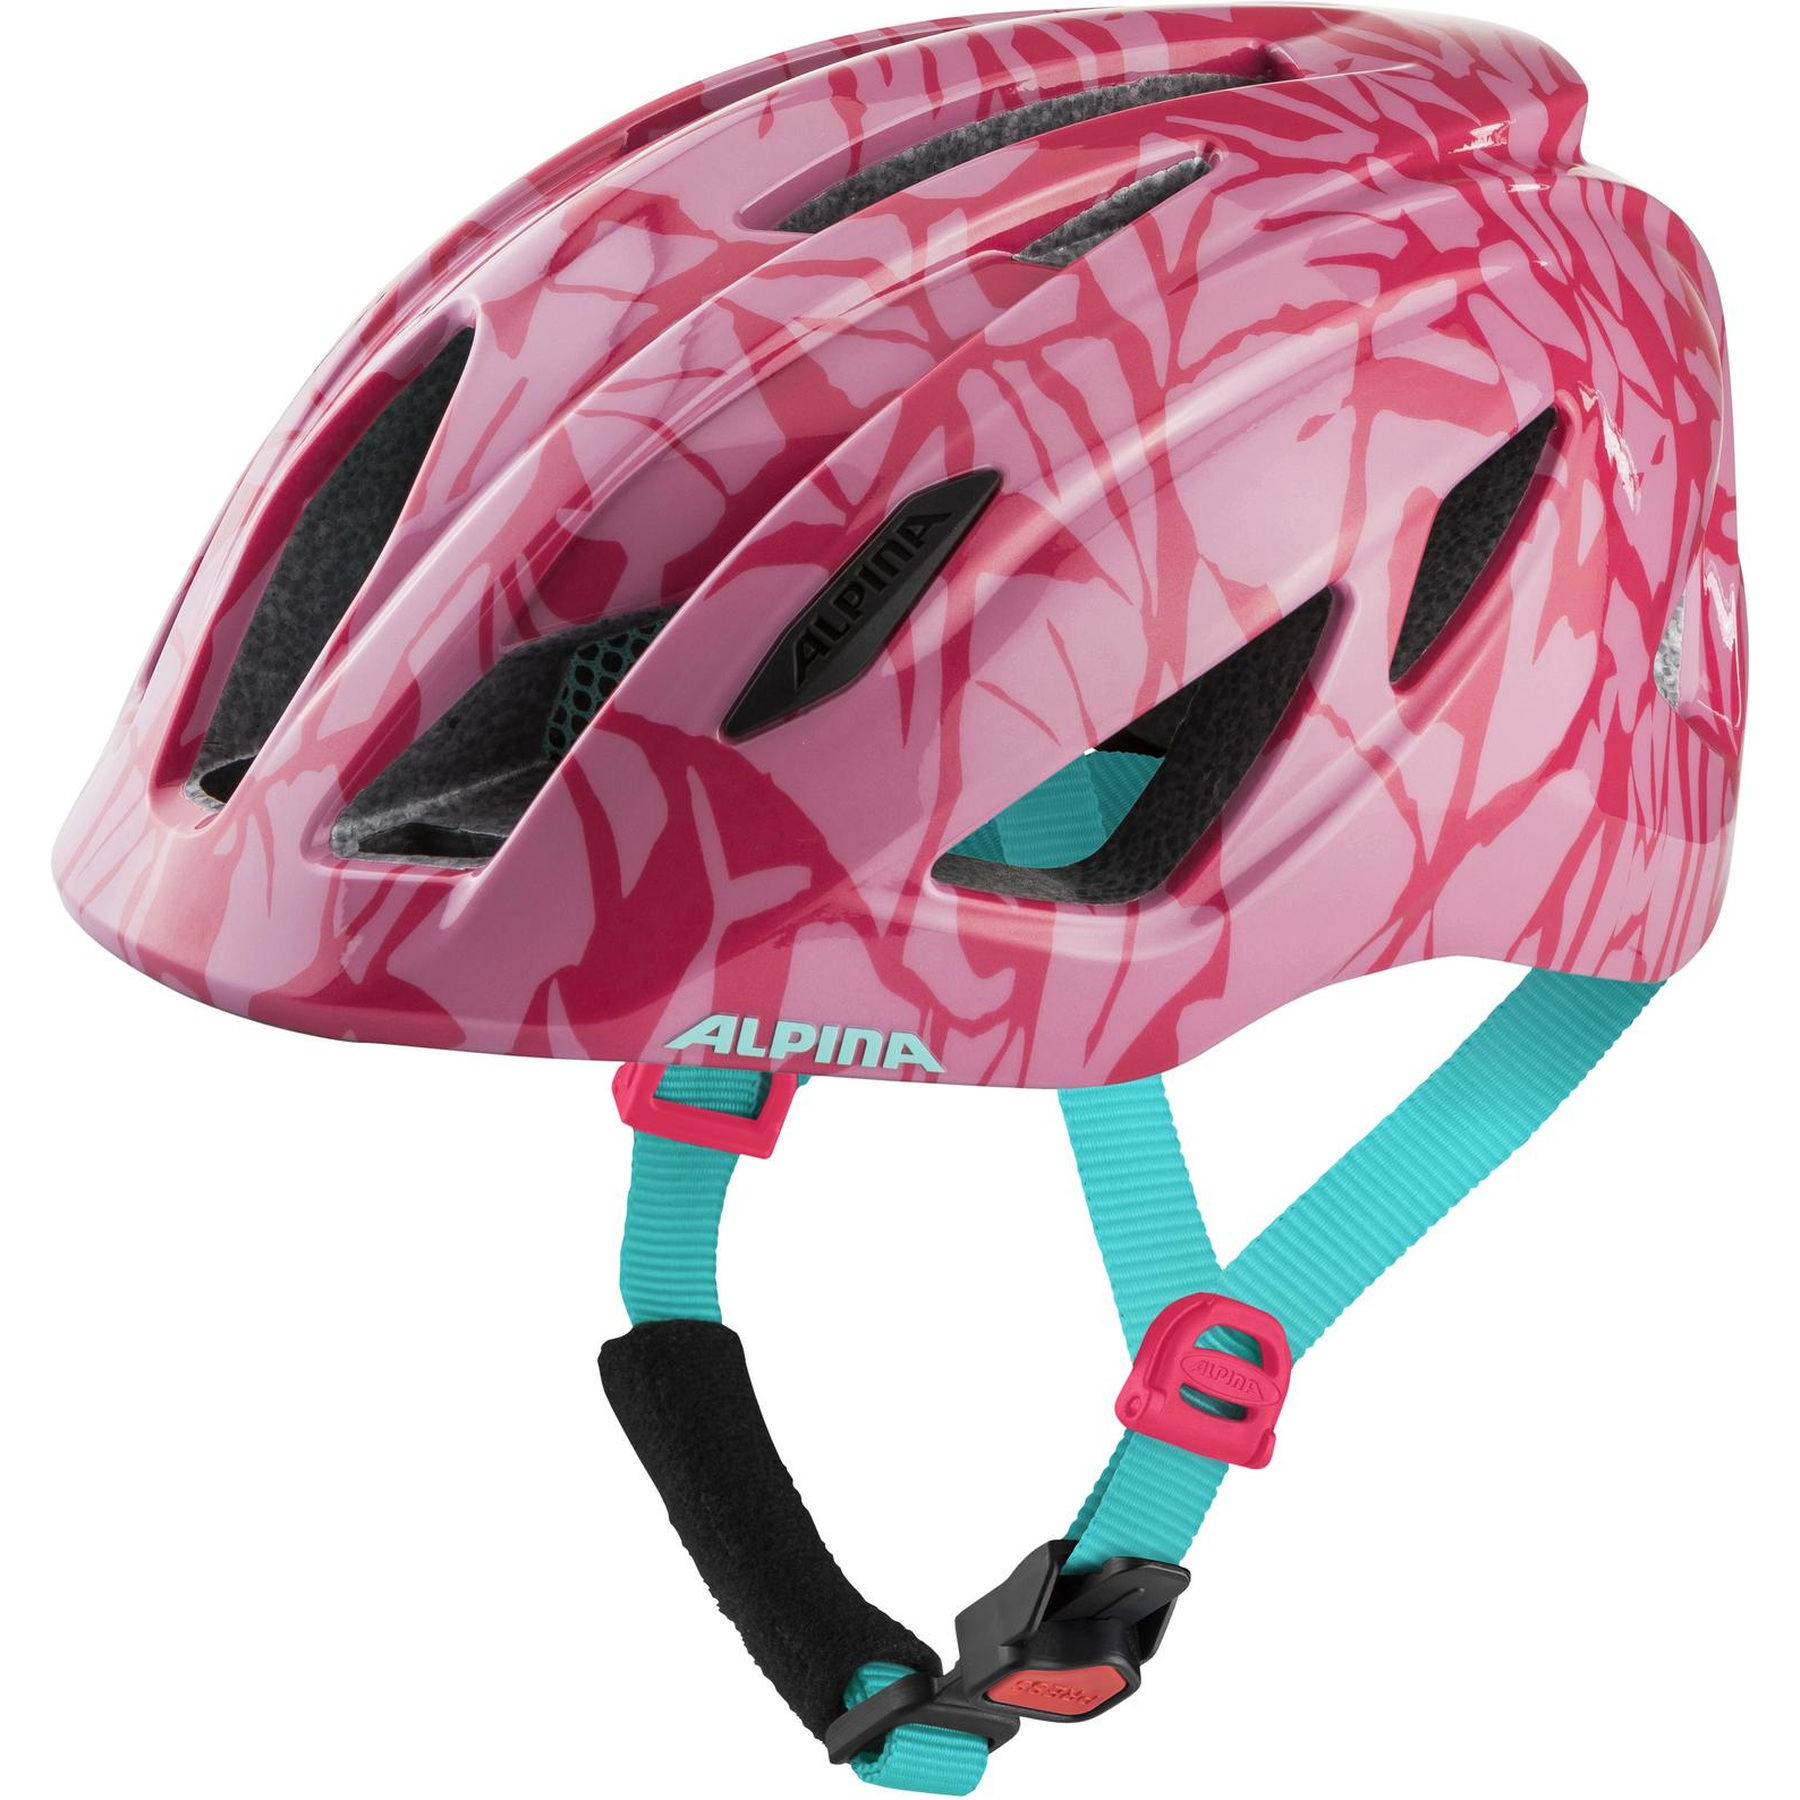 Picture of Alpina Pico Kids Bike Helmet - pink-sparkel gloss